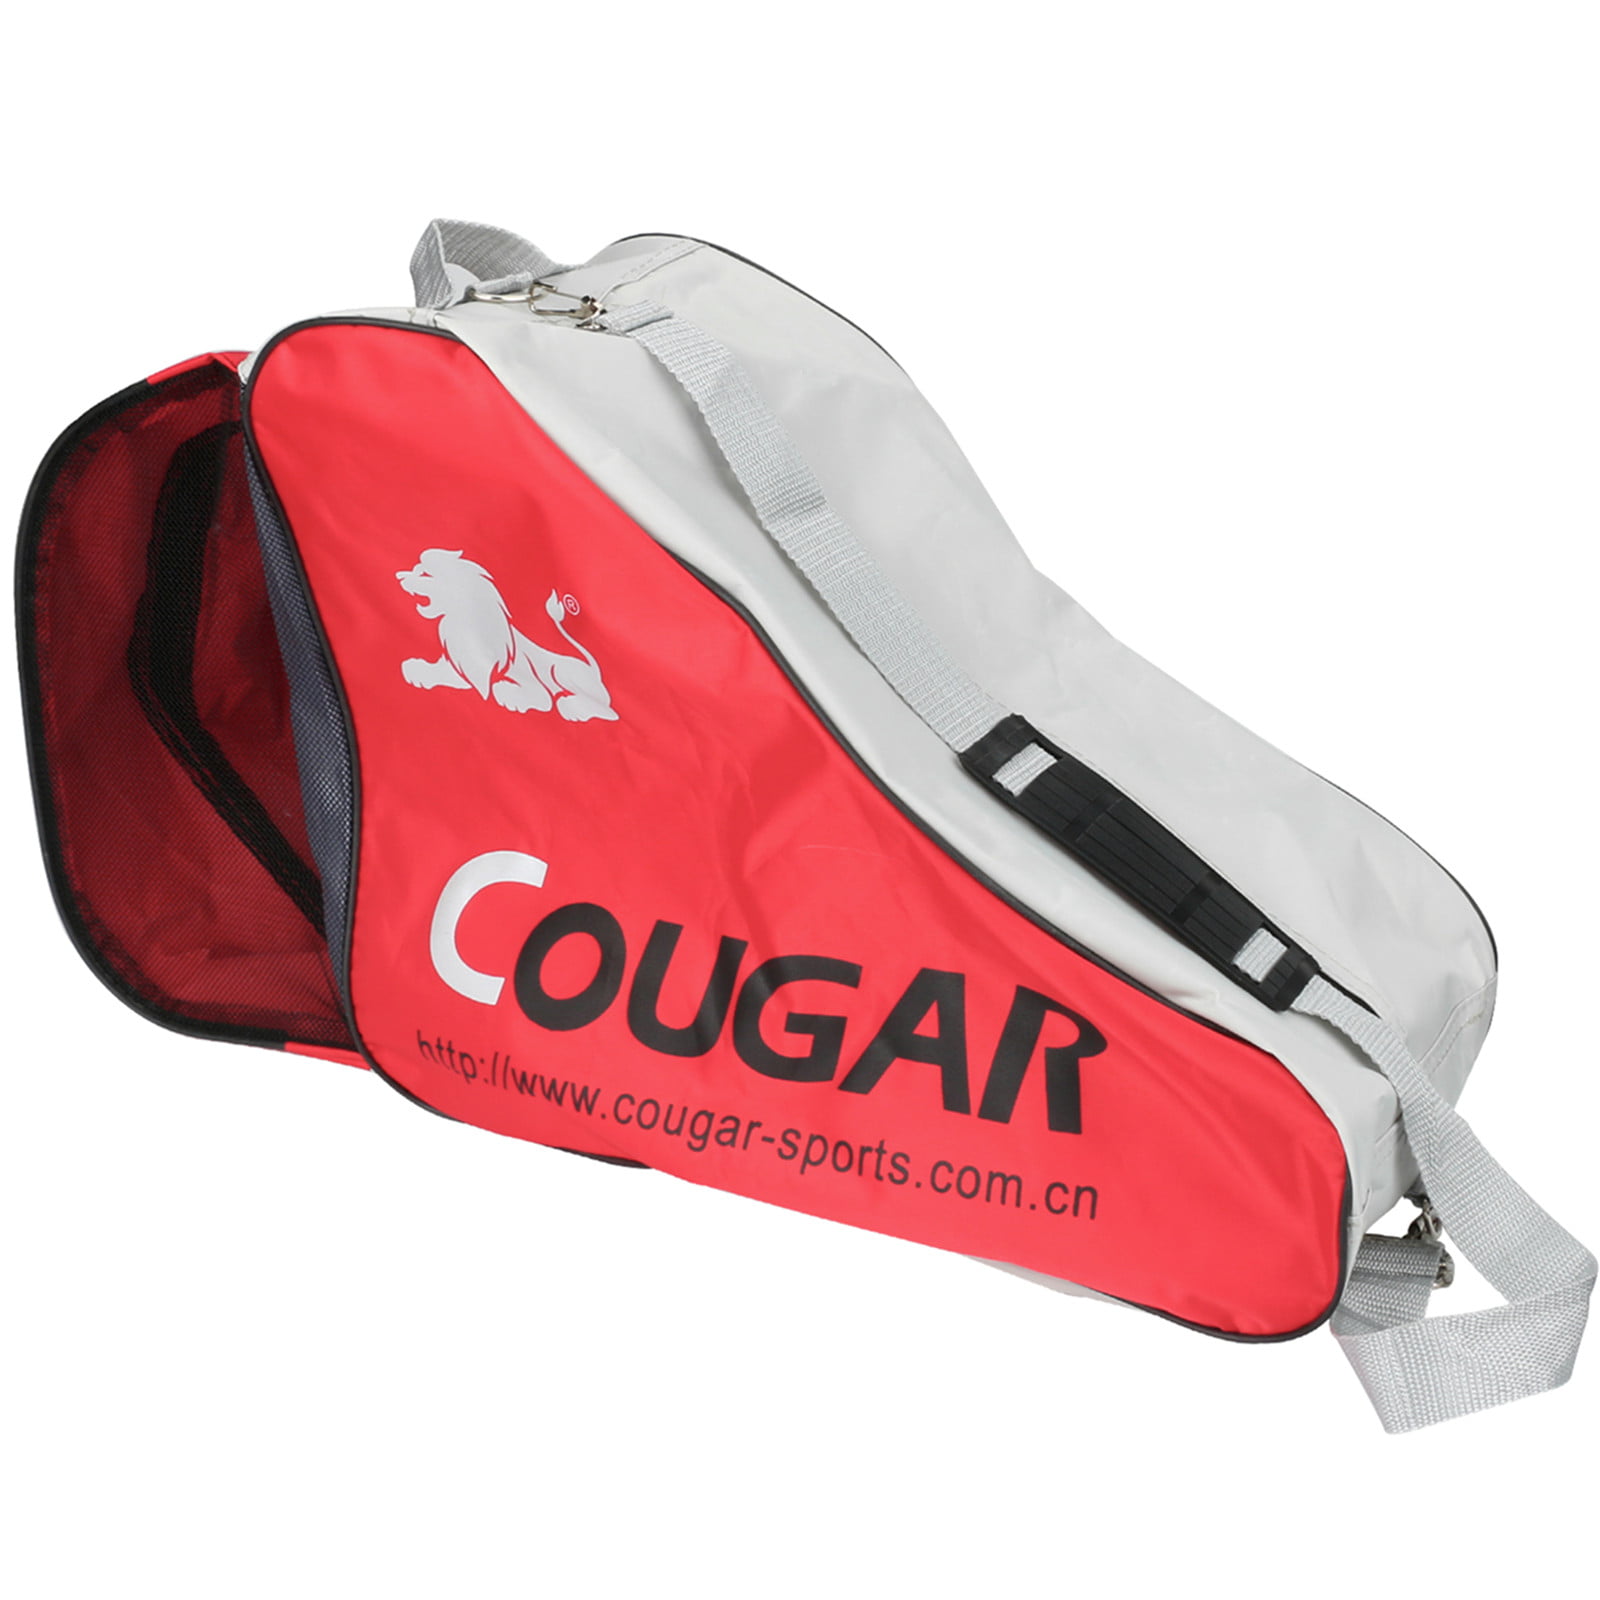 Roller Blading Carry Bag Heavy Duty Skate Bag Pouch with Shoulder Strap for Kids Adults Ice Skate Bag